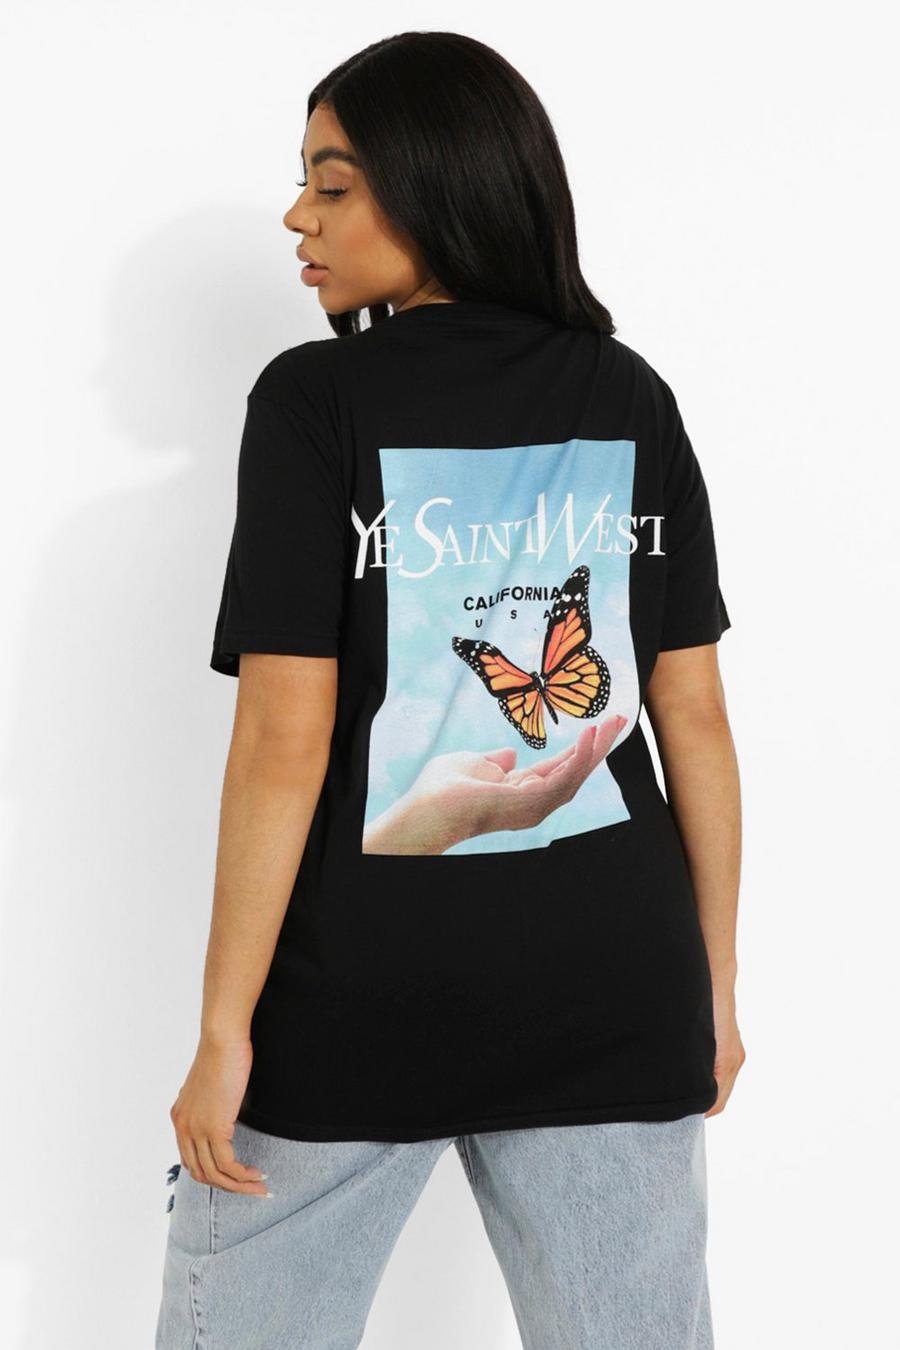 Grande taille - T-shirt Ye Saint West papillon, Black schwarz